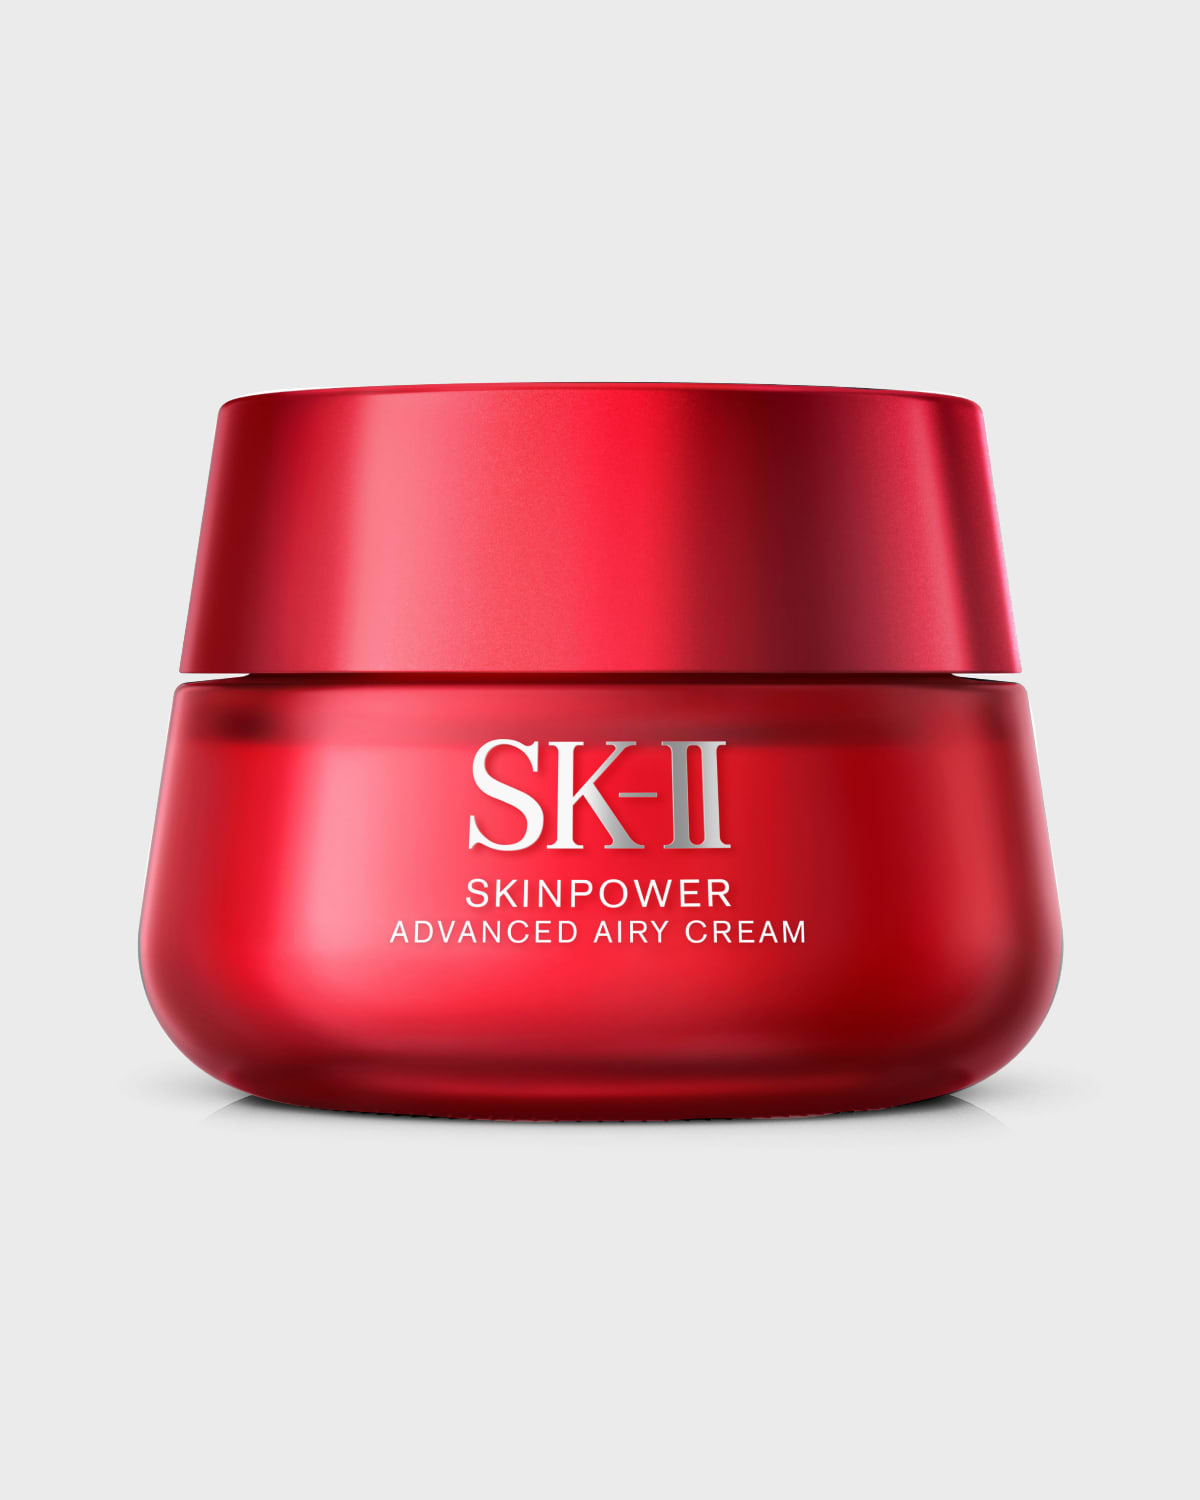 SkinPower Advanced Airy Cream, 1.7 oz.